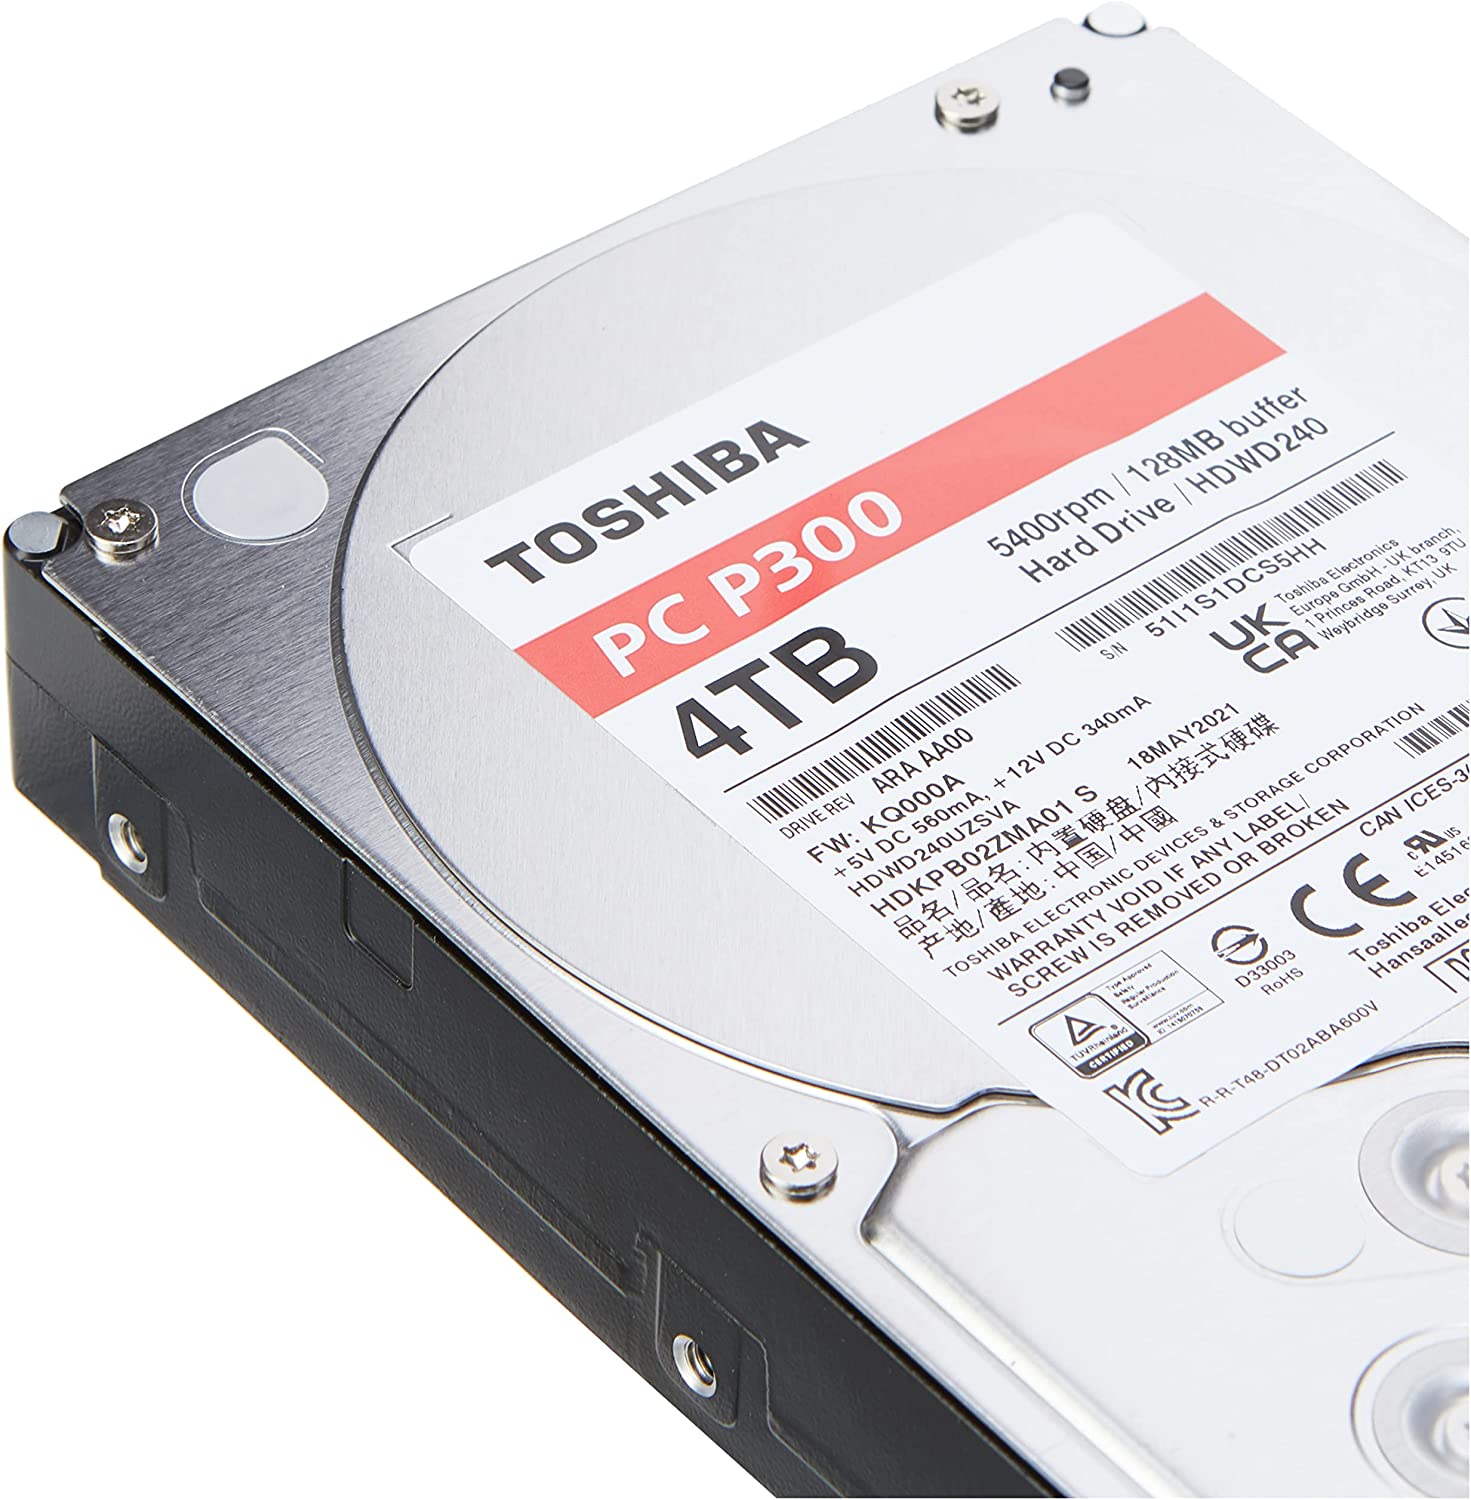 Toshiba P300 4TB HDD 3.5-inch, SATA3, 5400rpm, 128MB Cache, Bulk (HDWD240UZSVA)